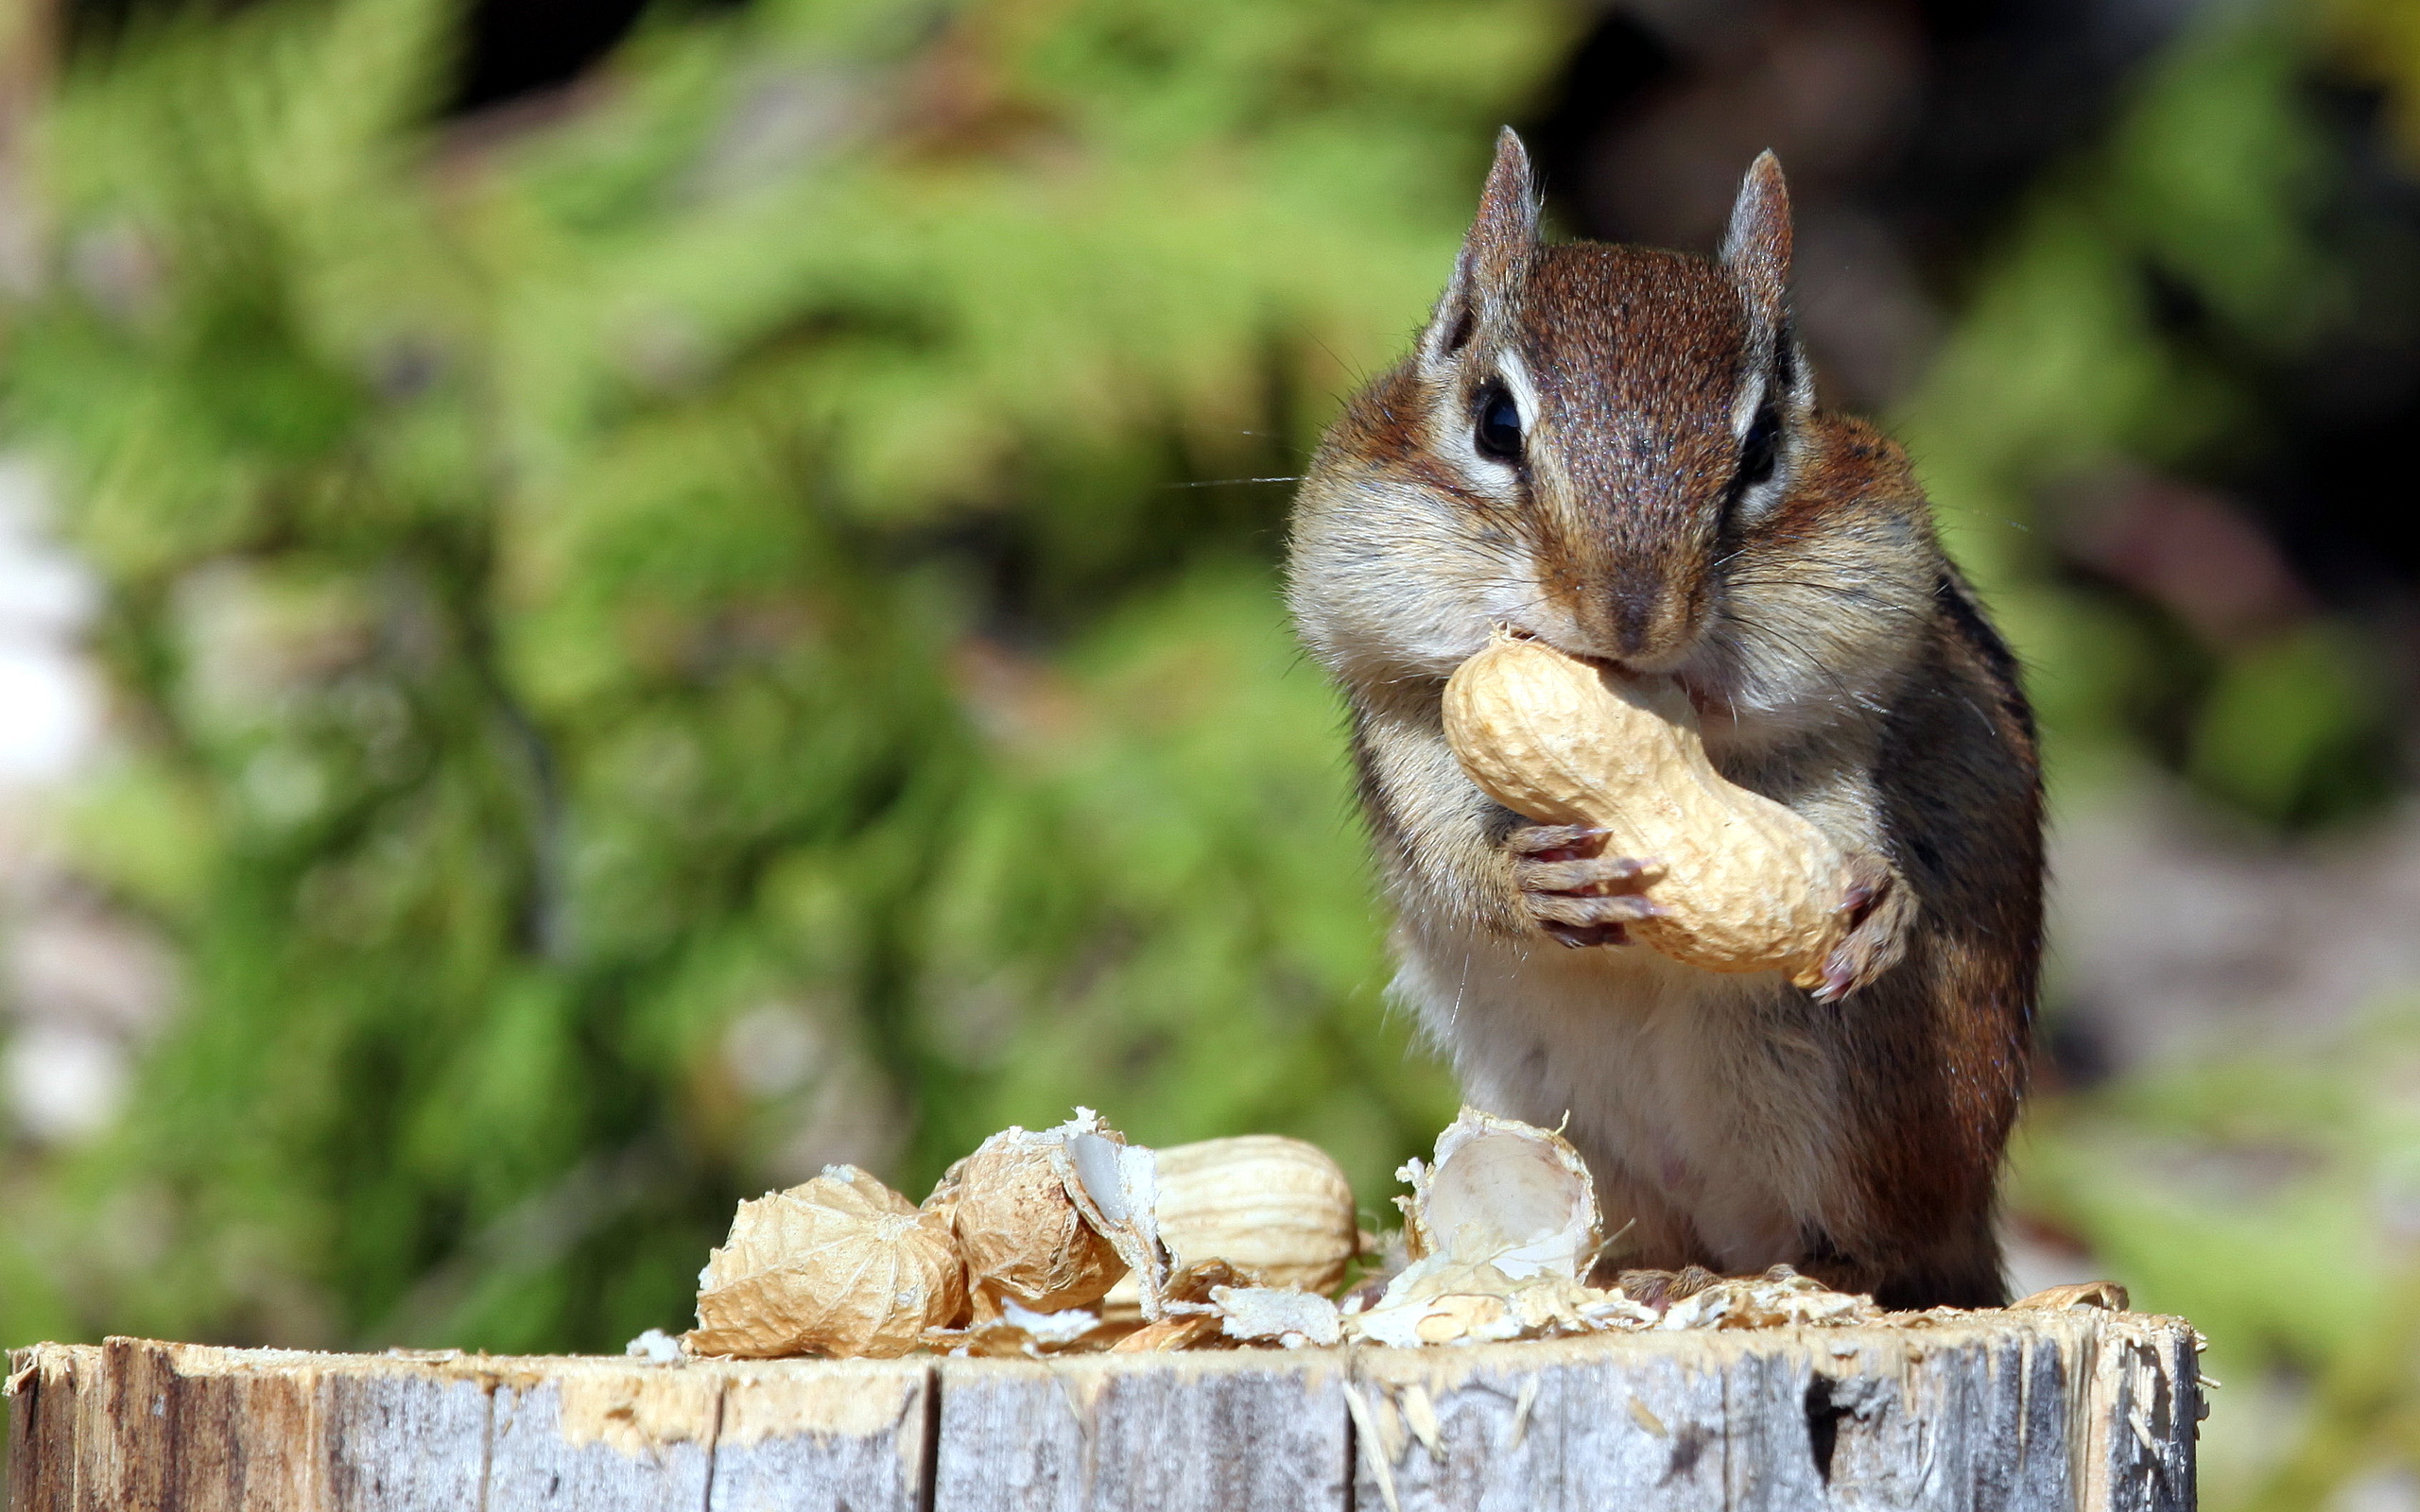 Nut eating